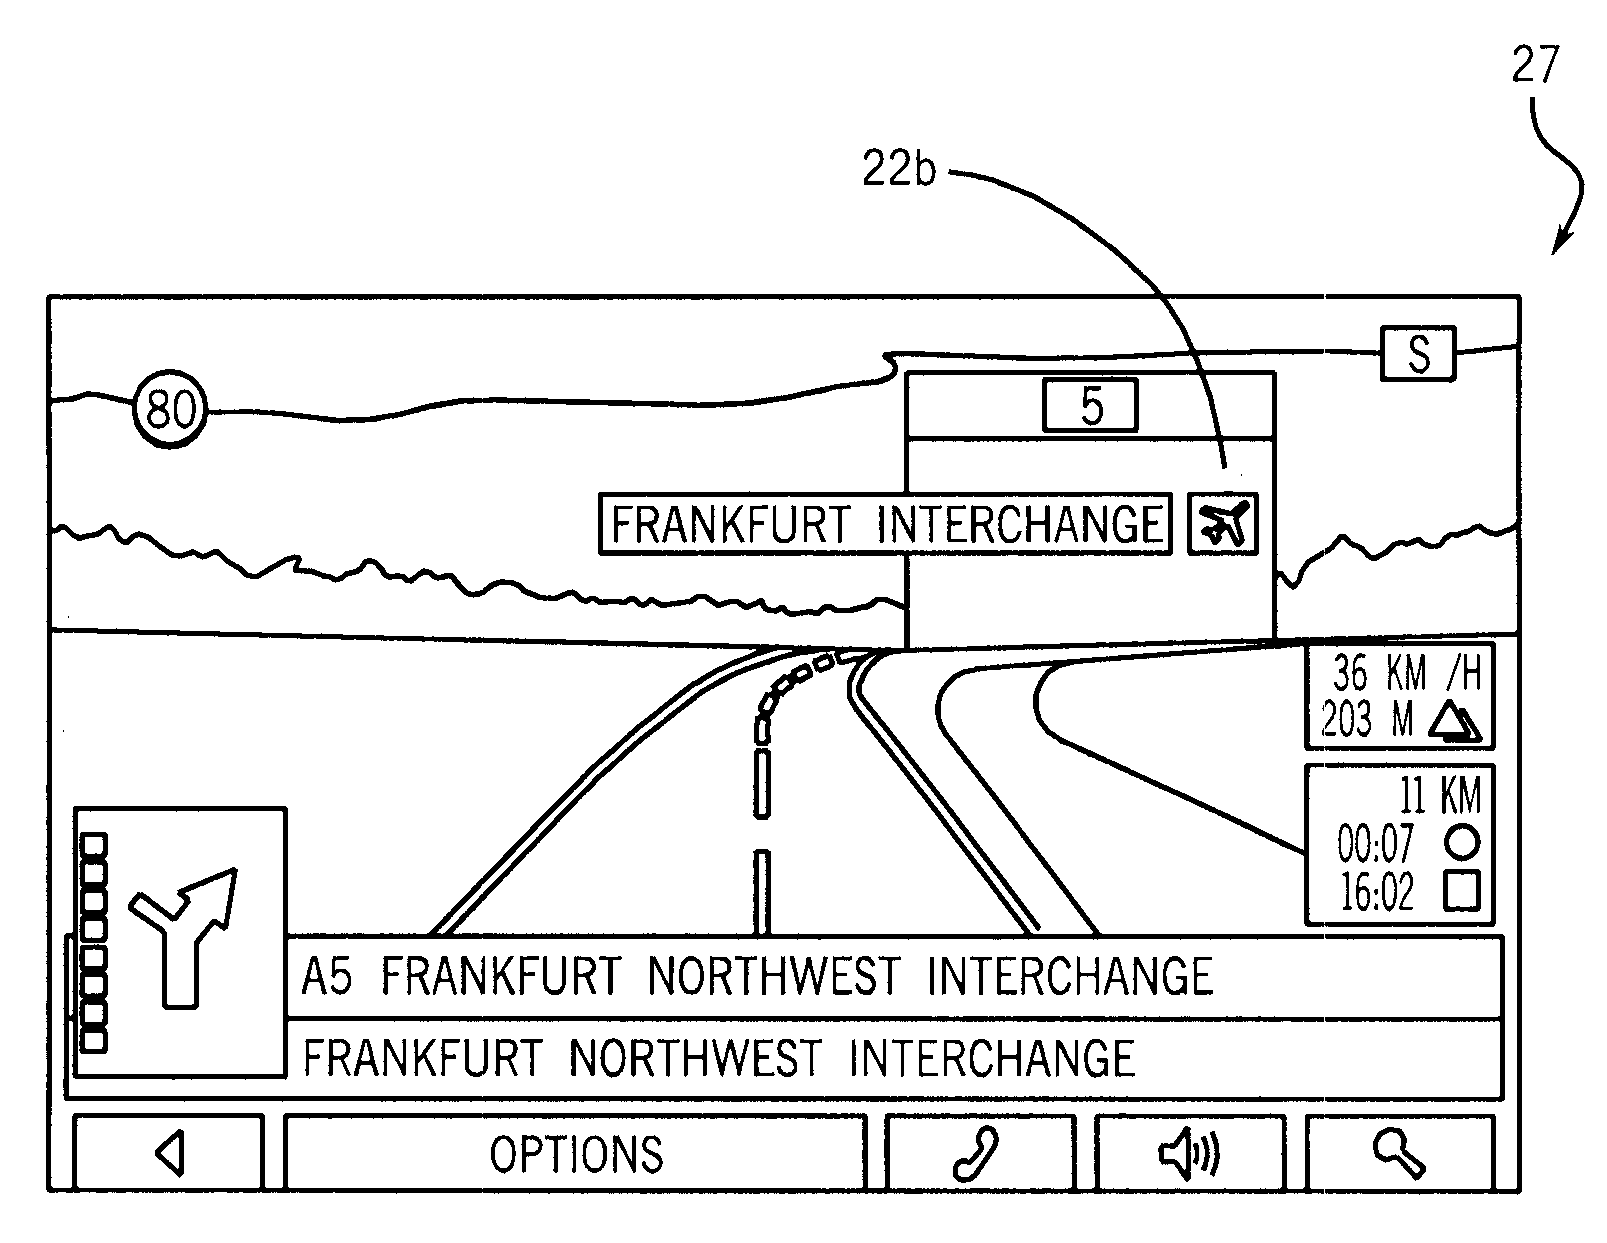 Method For Operating A Navigation System